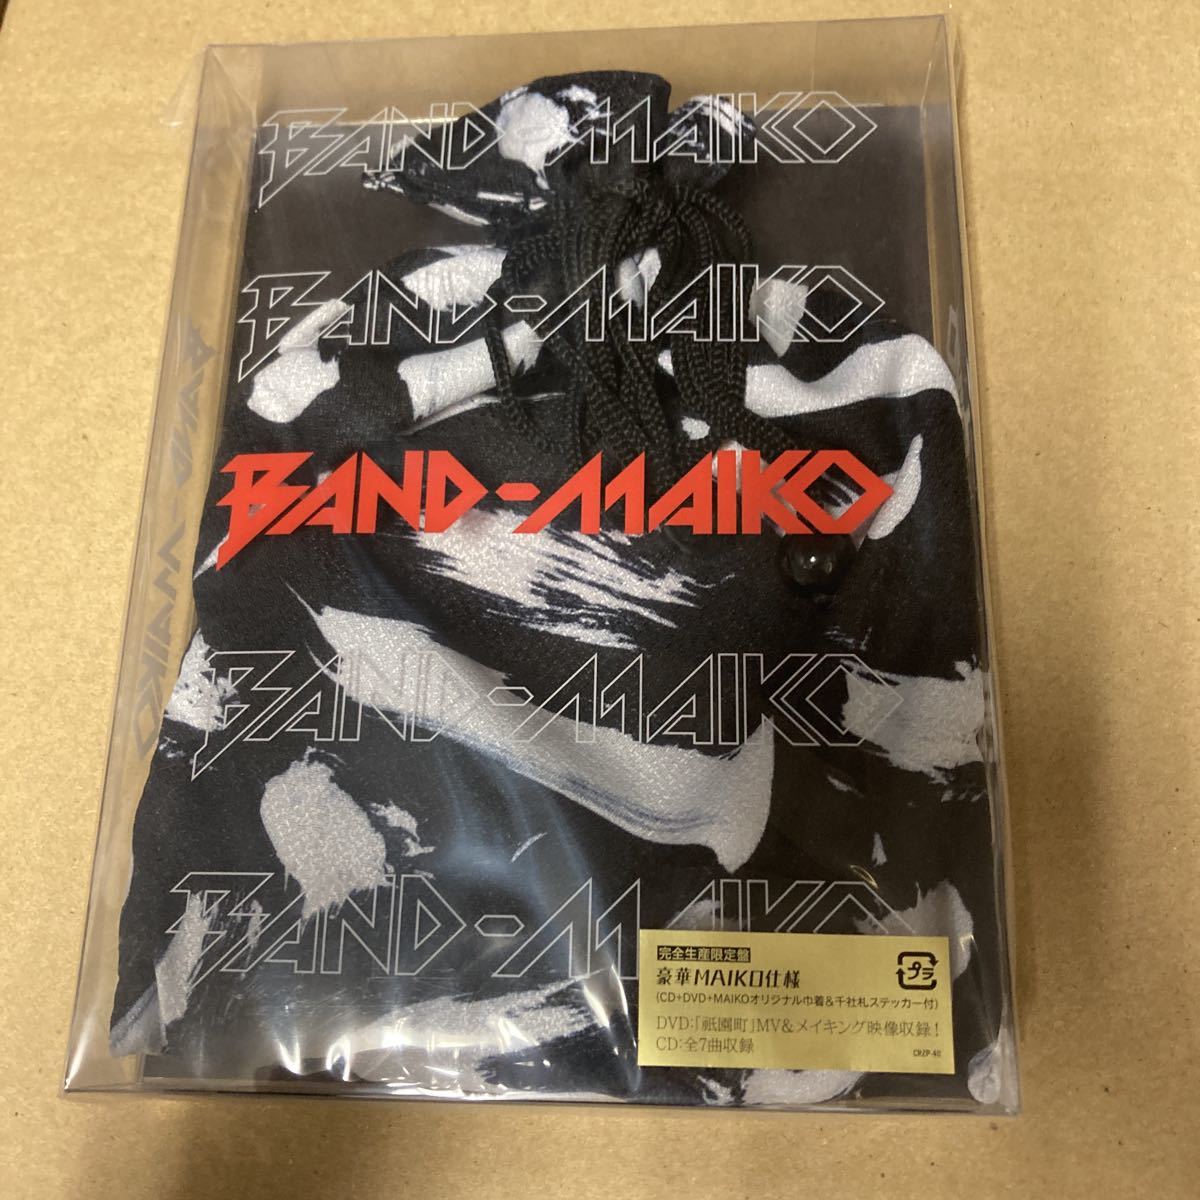 即決 完全生産限定盤 BAND-MAIKO CD+DVD/BAND-MAIKO 新品未開封